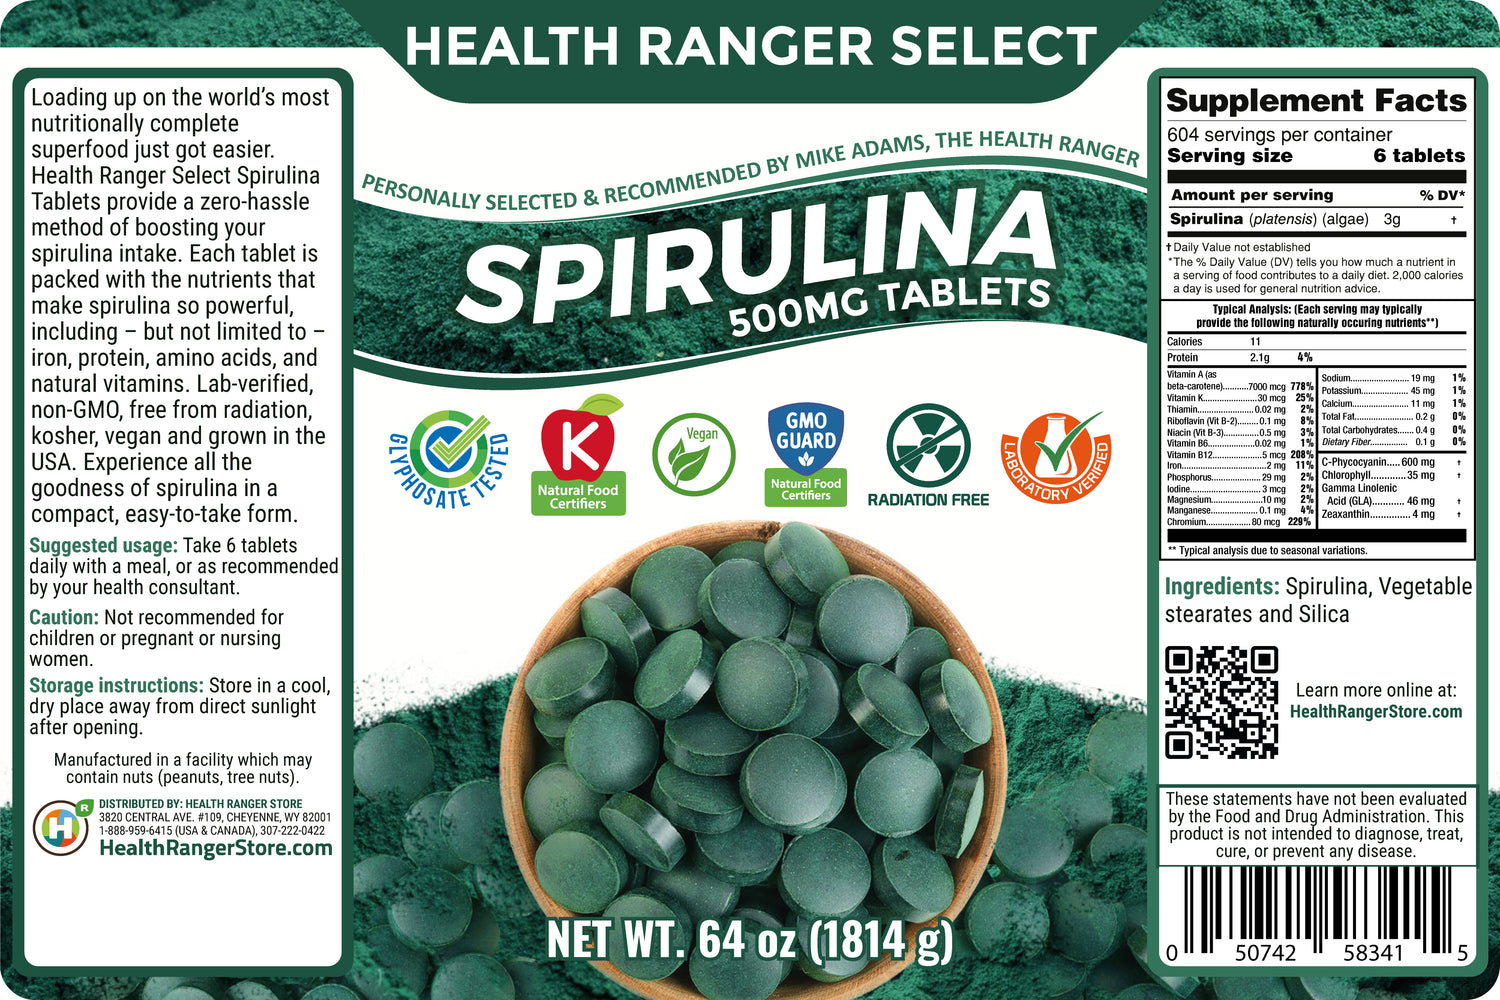 Health Ranger Select Spirulina 500mg Tablets 64oz (1814g) 